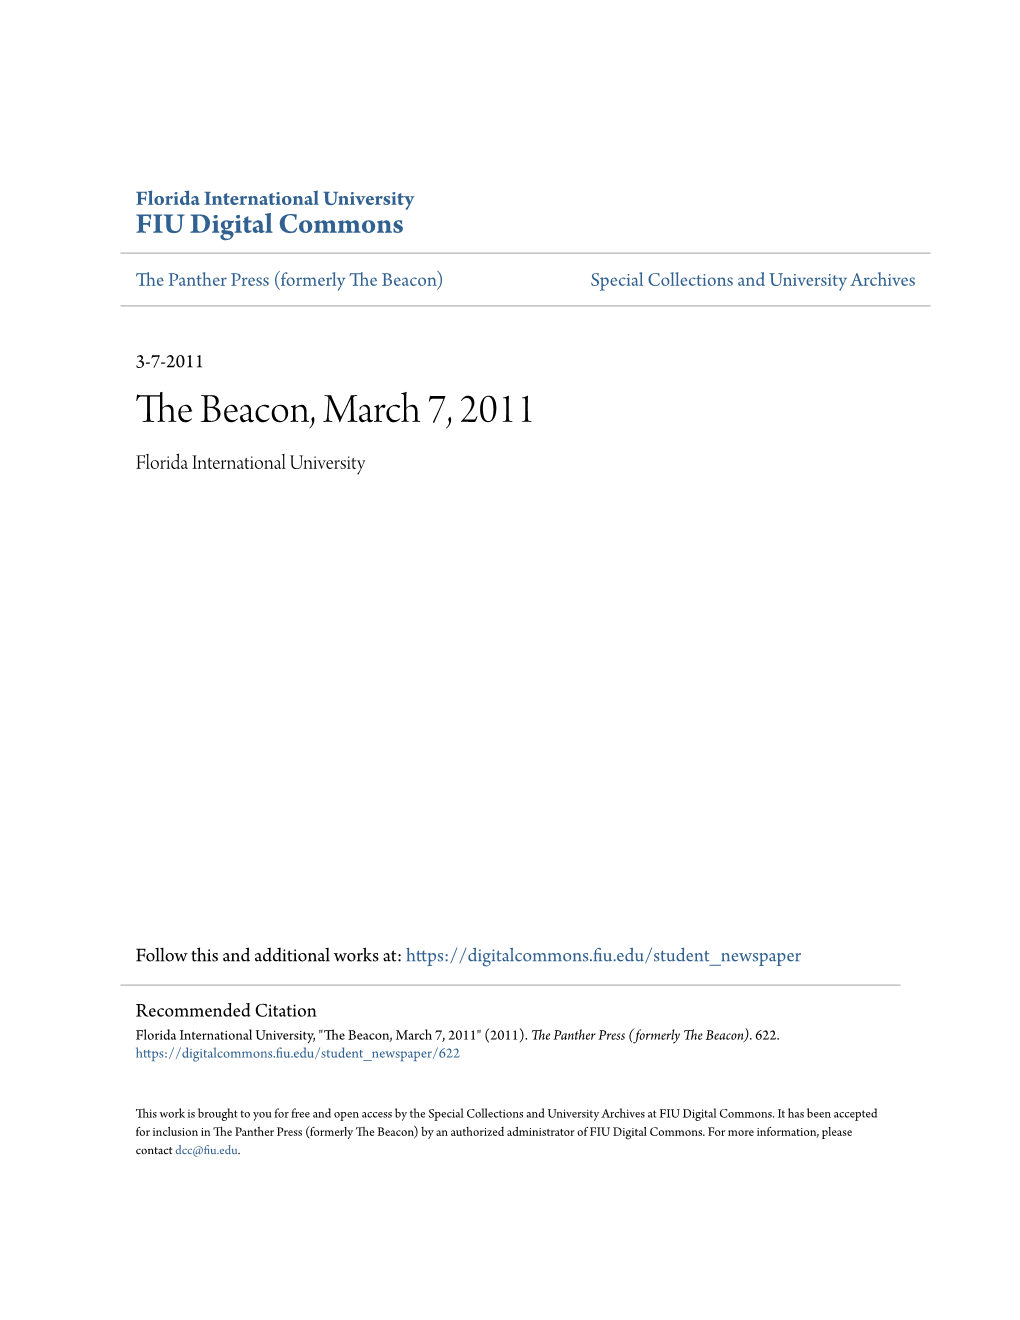 The Beacon, March 7, 2011 Florida International University